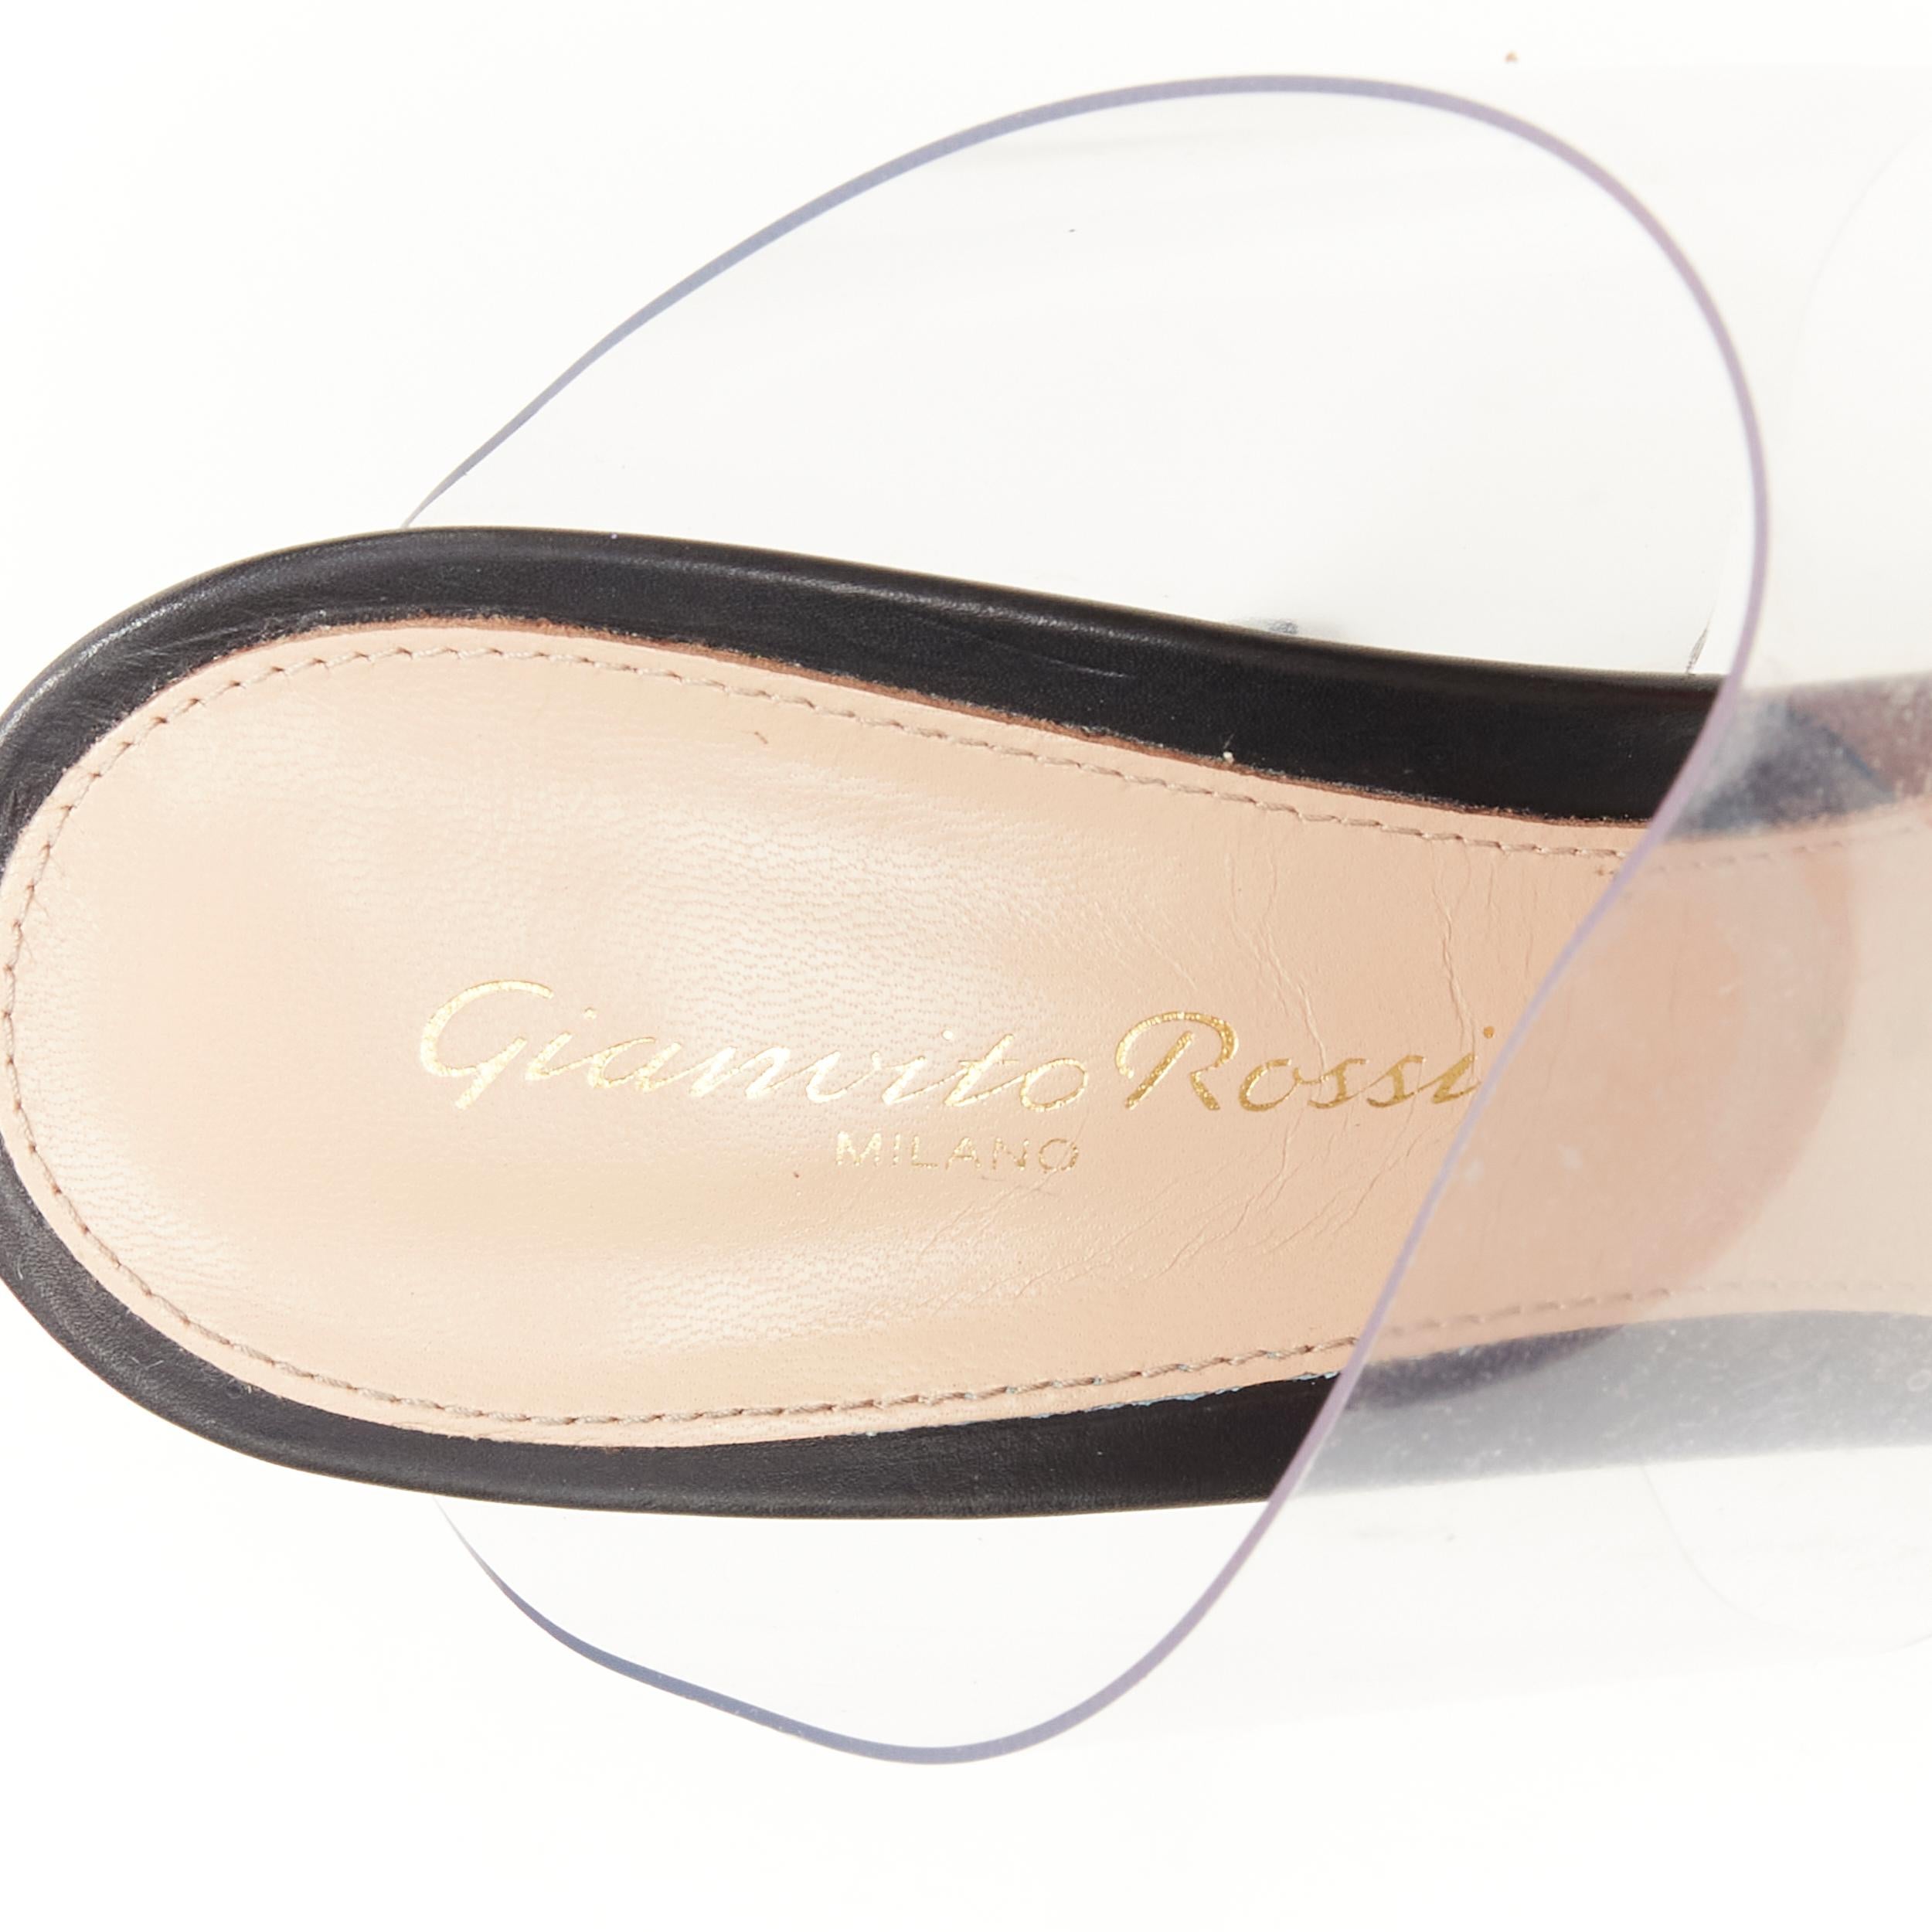 GIANVITO ROSSI Plexi black leather toe clear PVC mule heel EU39 US9 For Sale 4